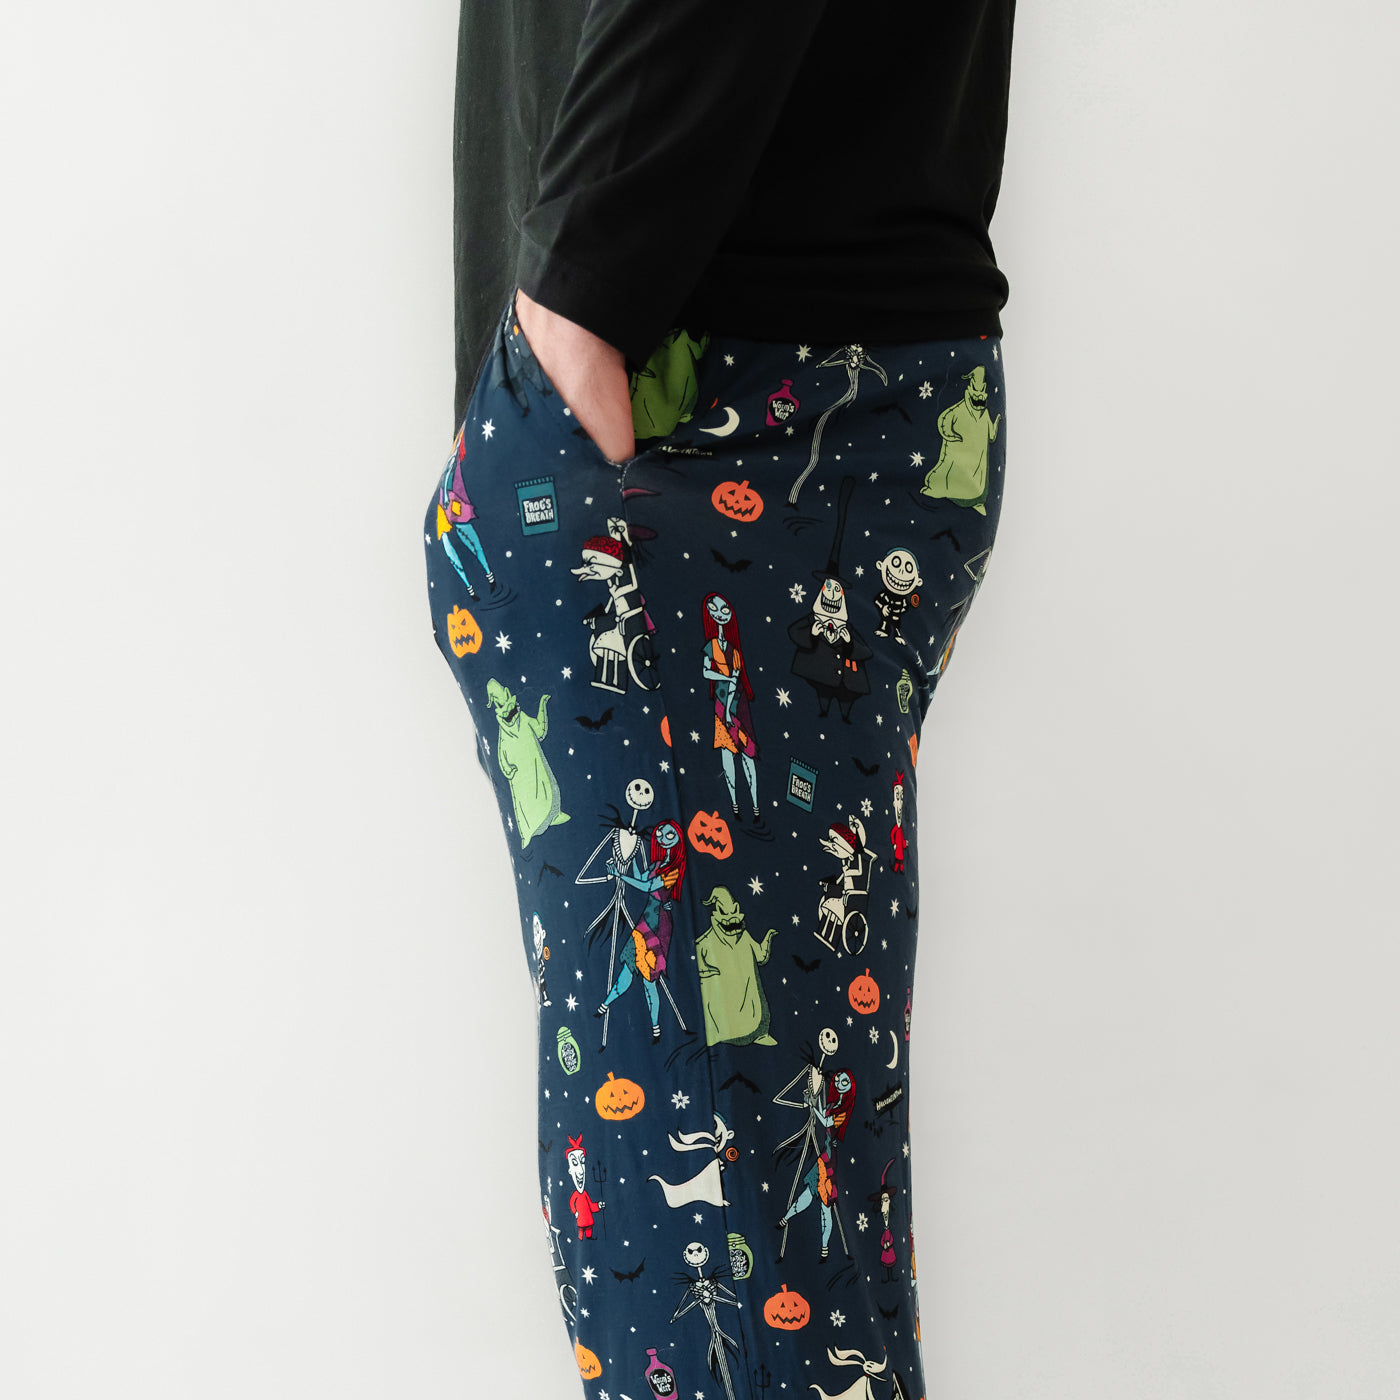 Side view image of a man wearing Jack Skellington and Friends printed men's pajama pants